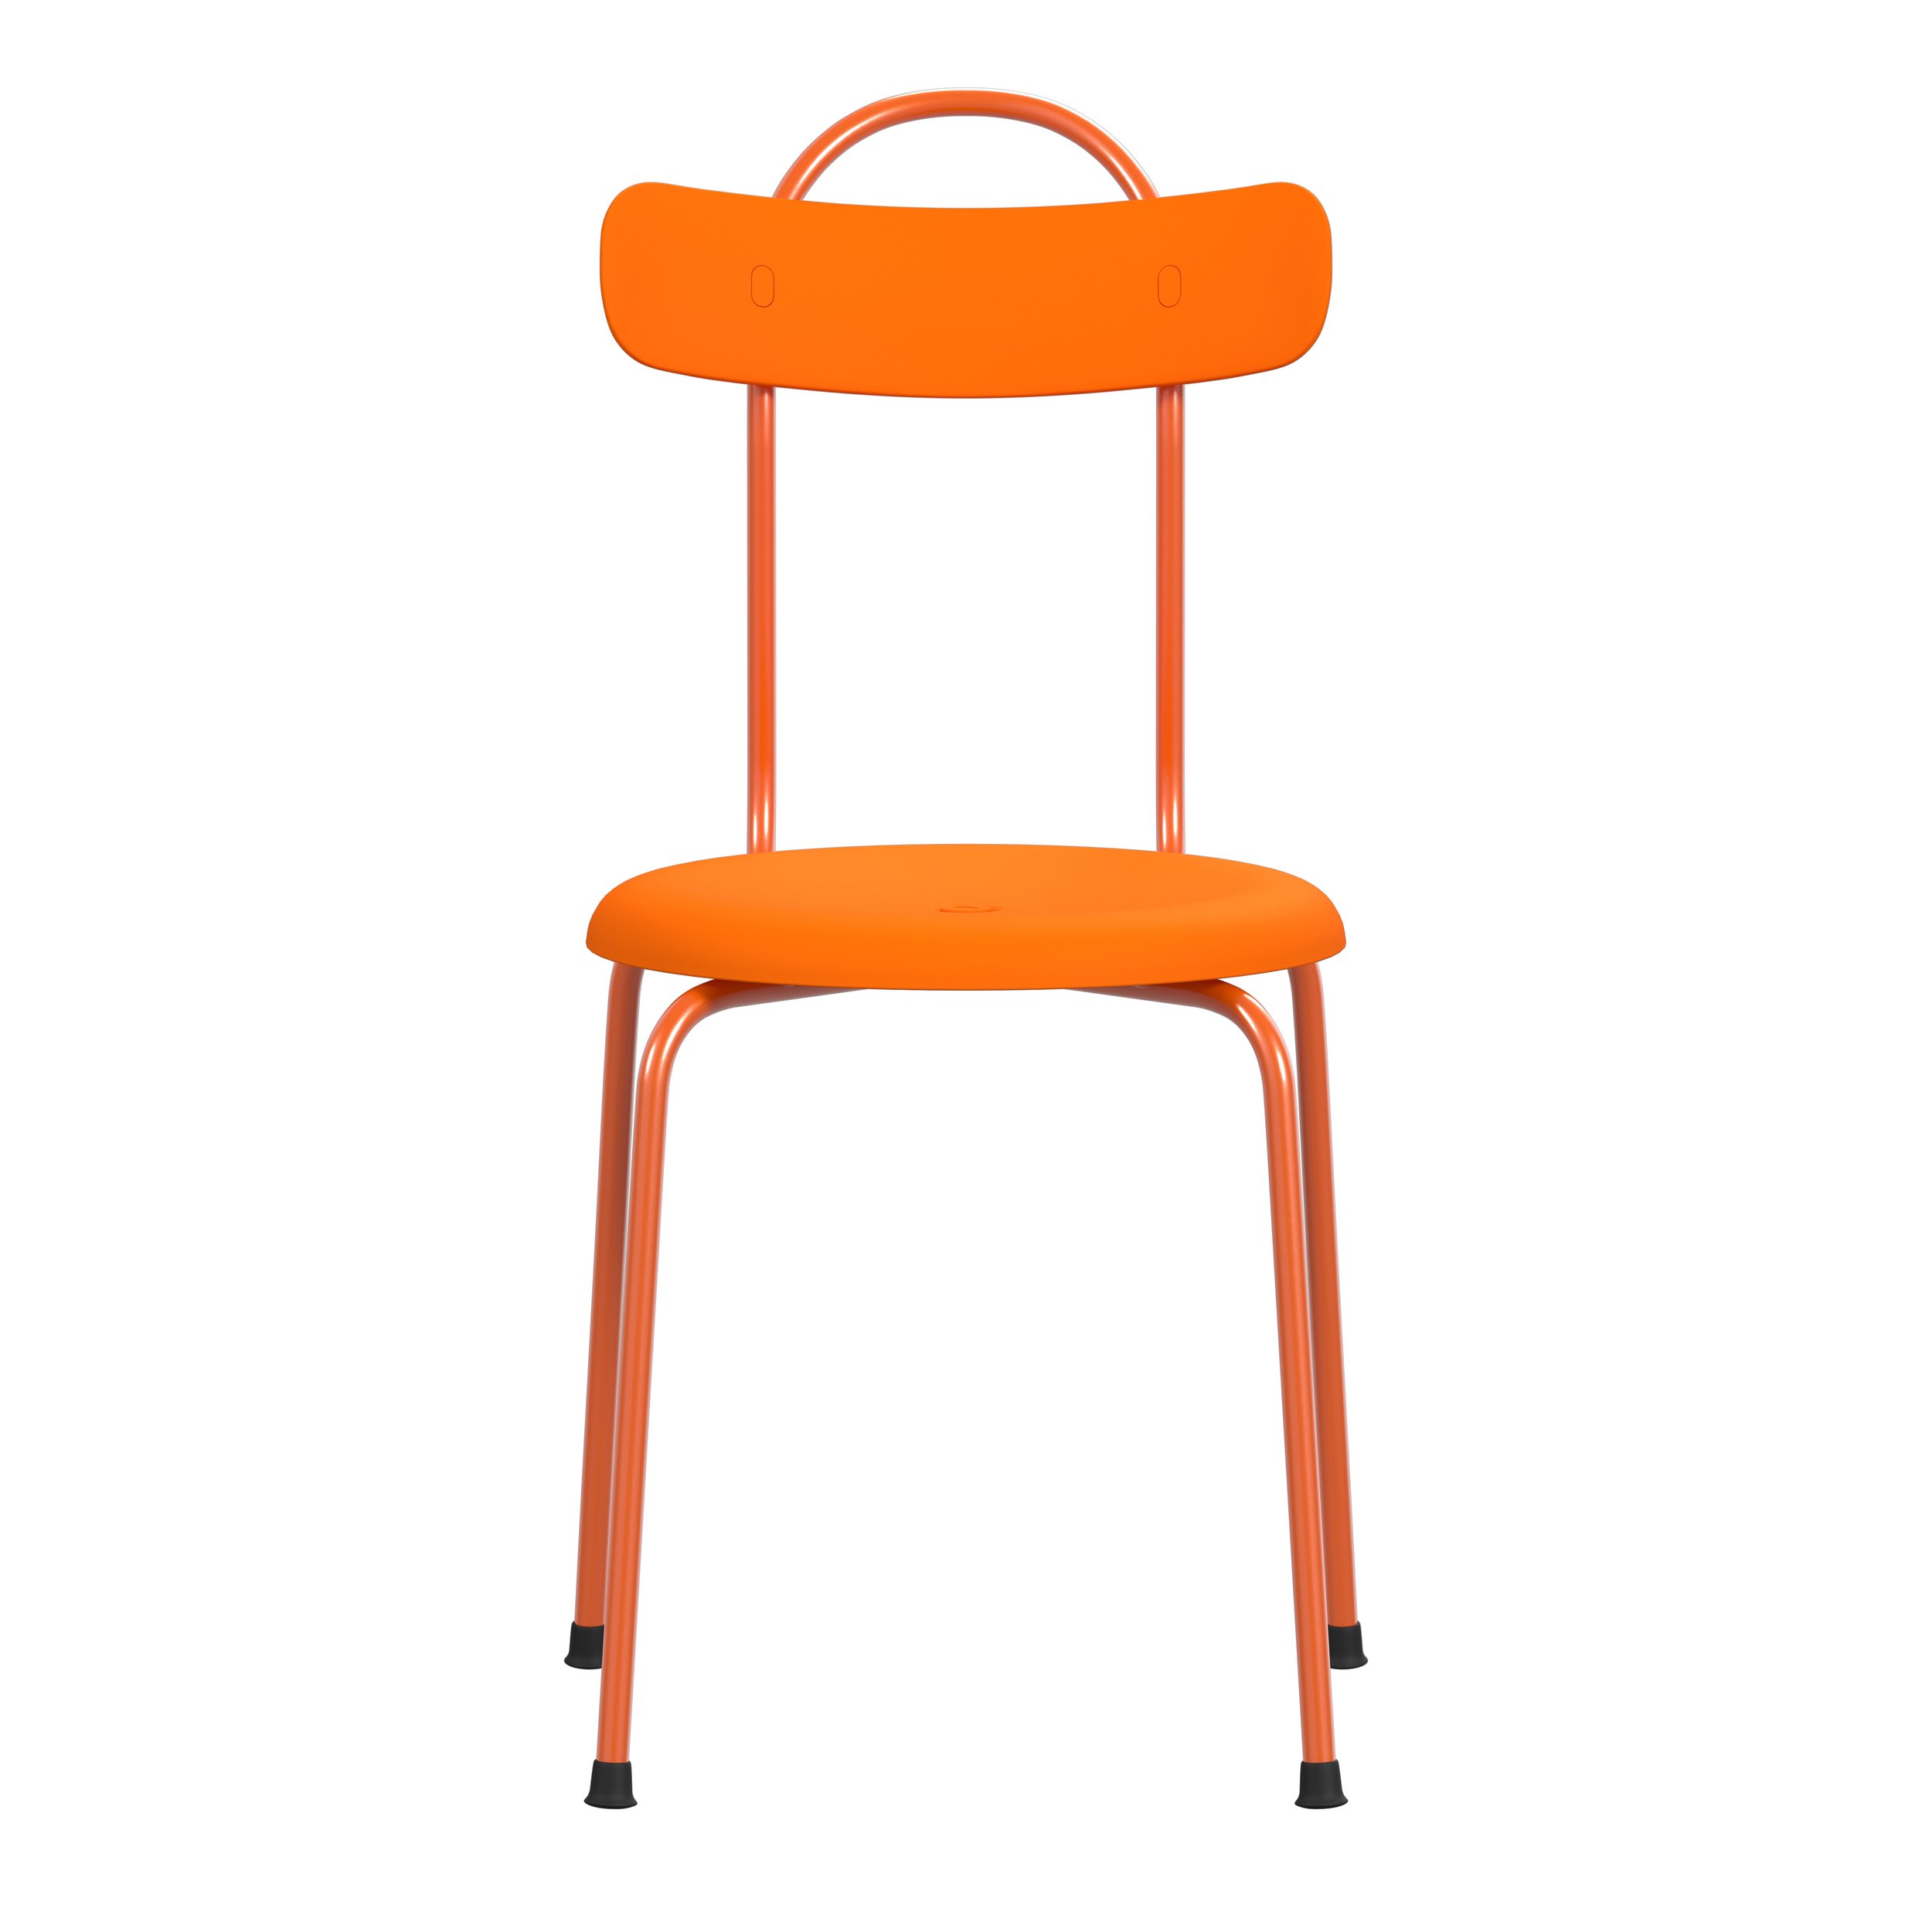 Lammhults_TaburettPlus_chair_orange_orange_front.jpeg